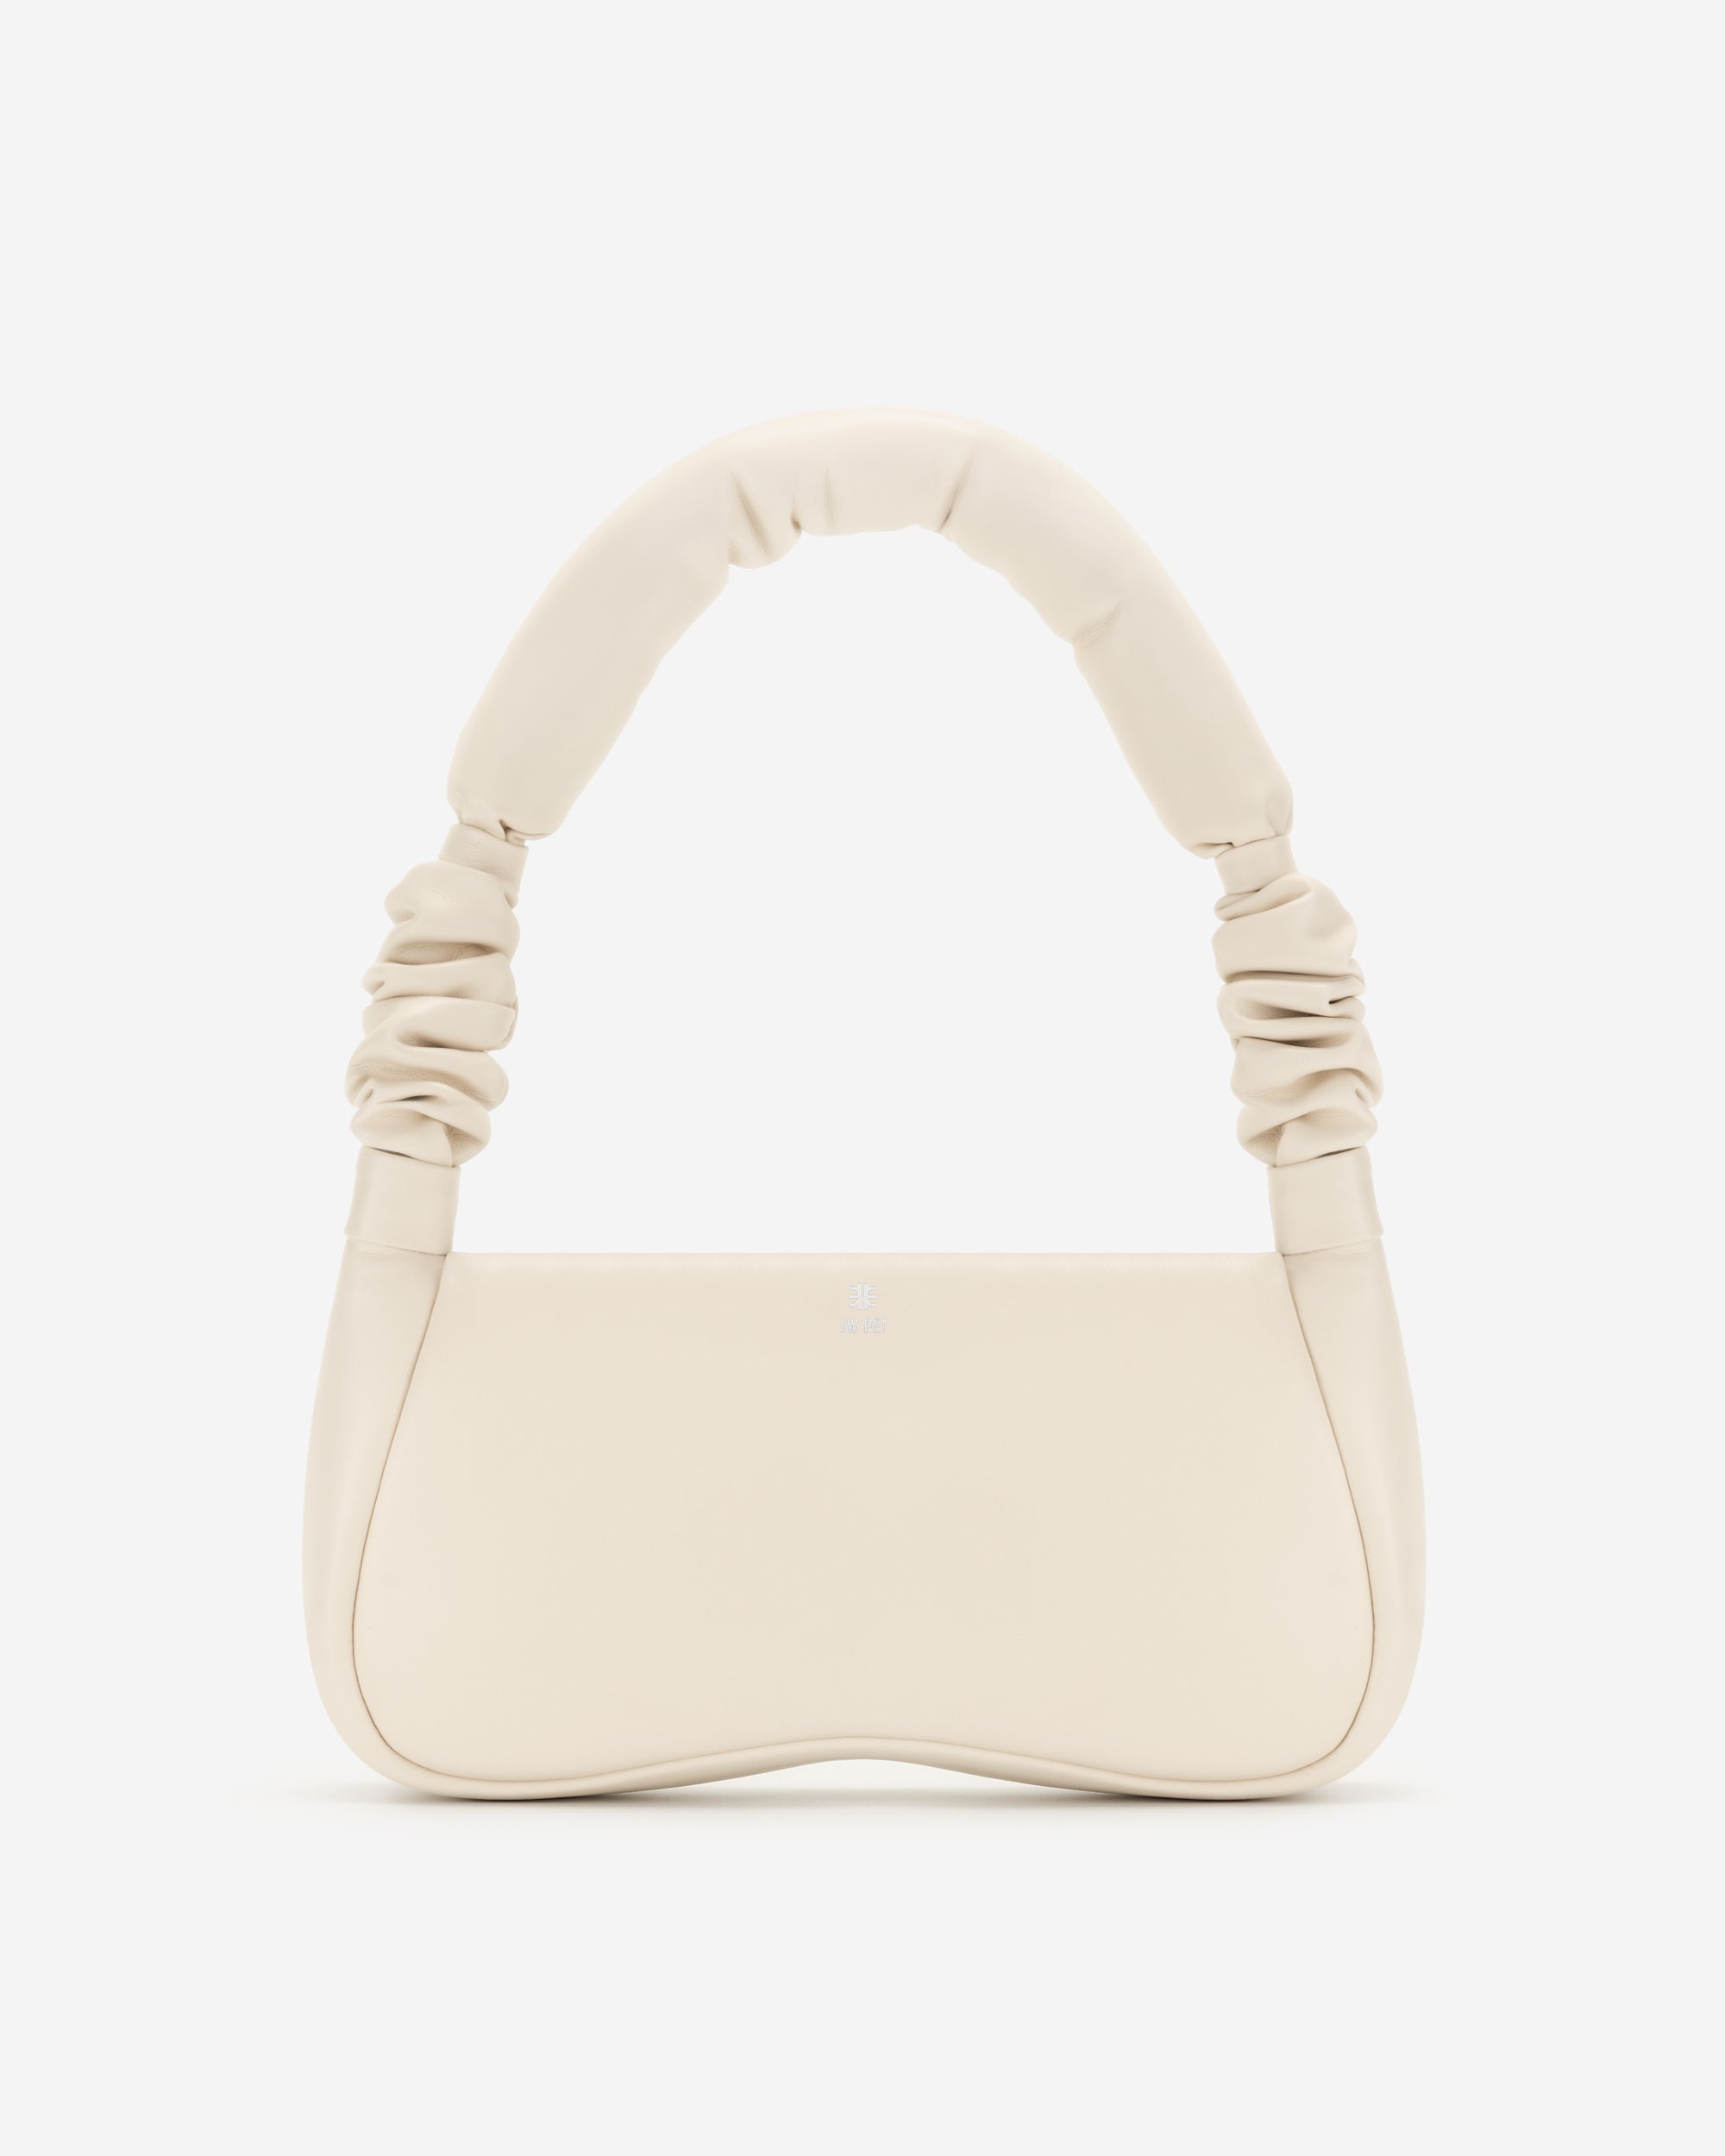 Reviewing 6 JW PEI Handbags (Celebs' FAVE Affordable Vegan Brand) 